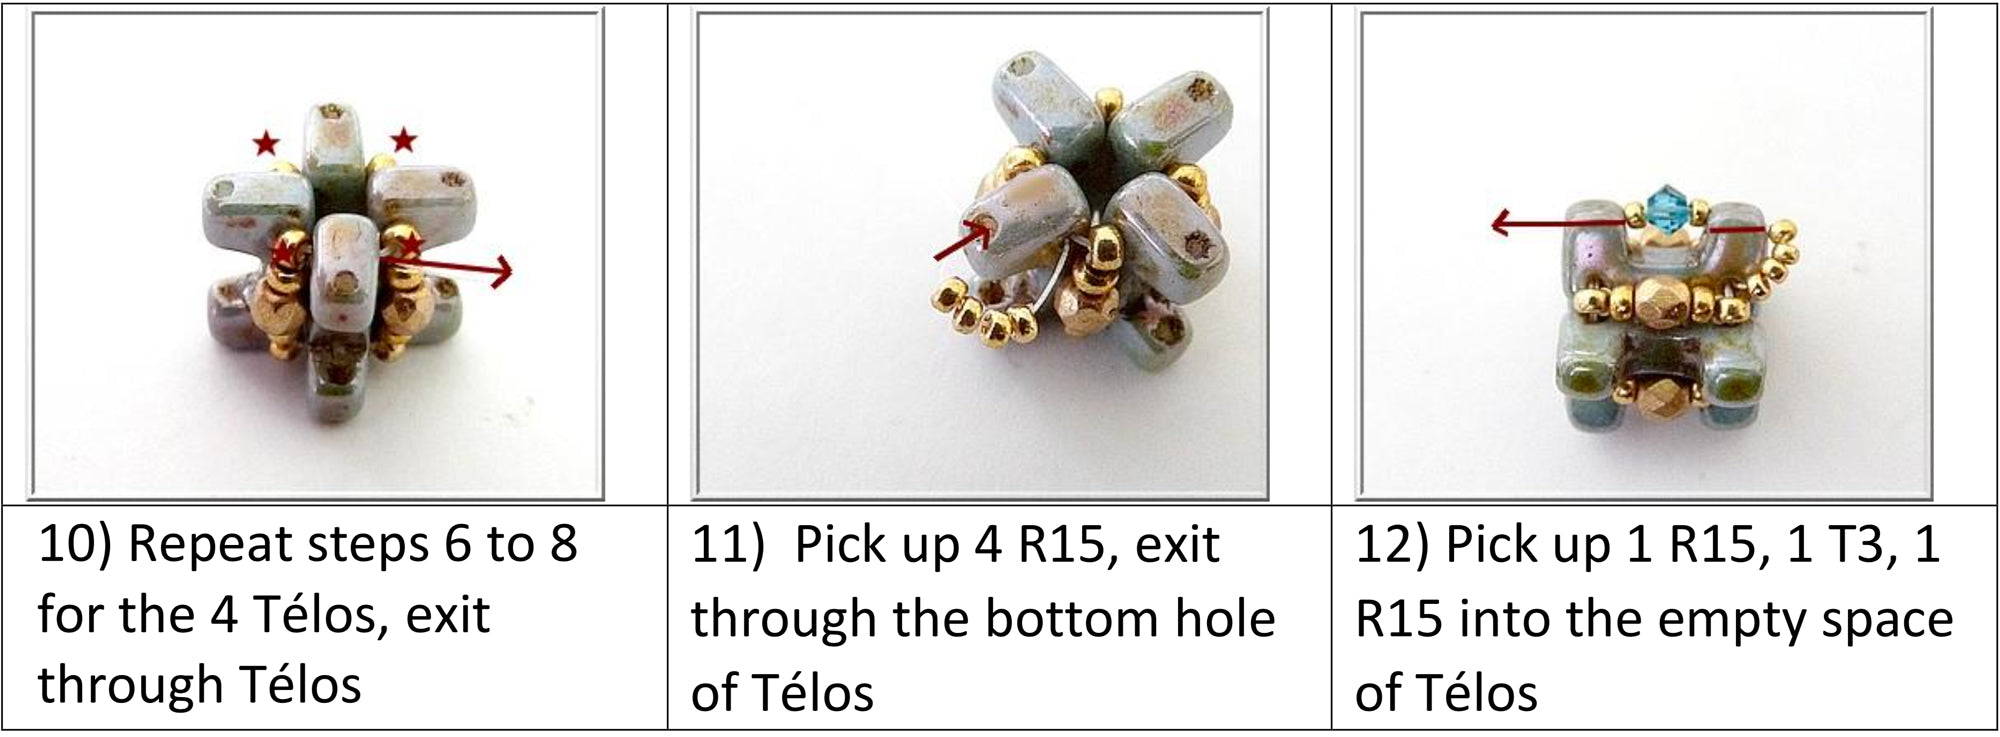 Talia beaded element by par Puca with Telos beads - free tutorail beaded pattern